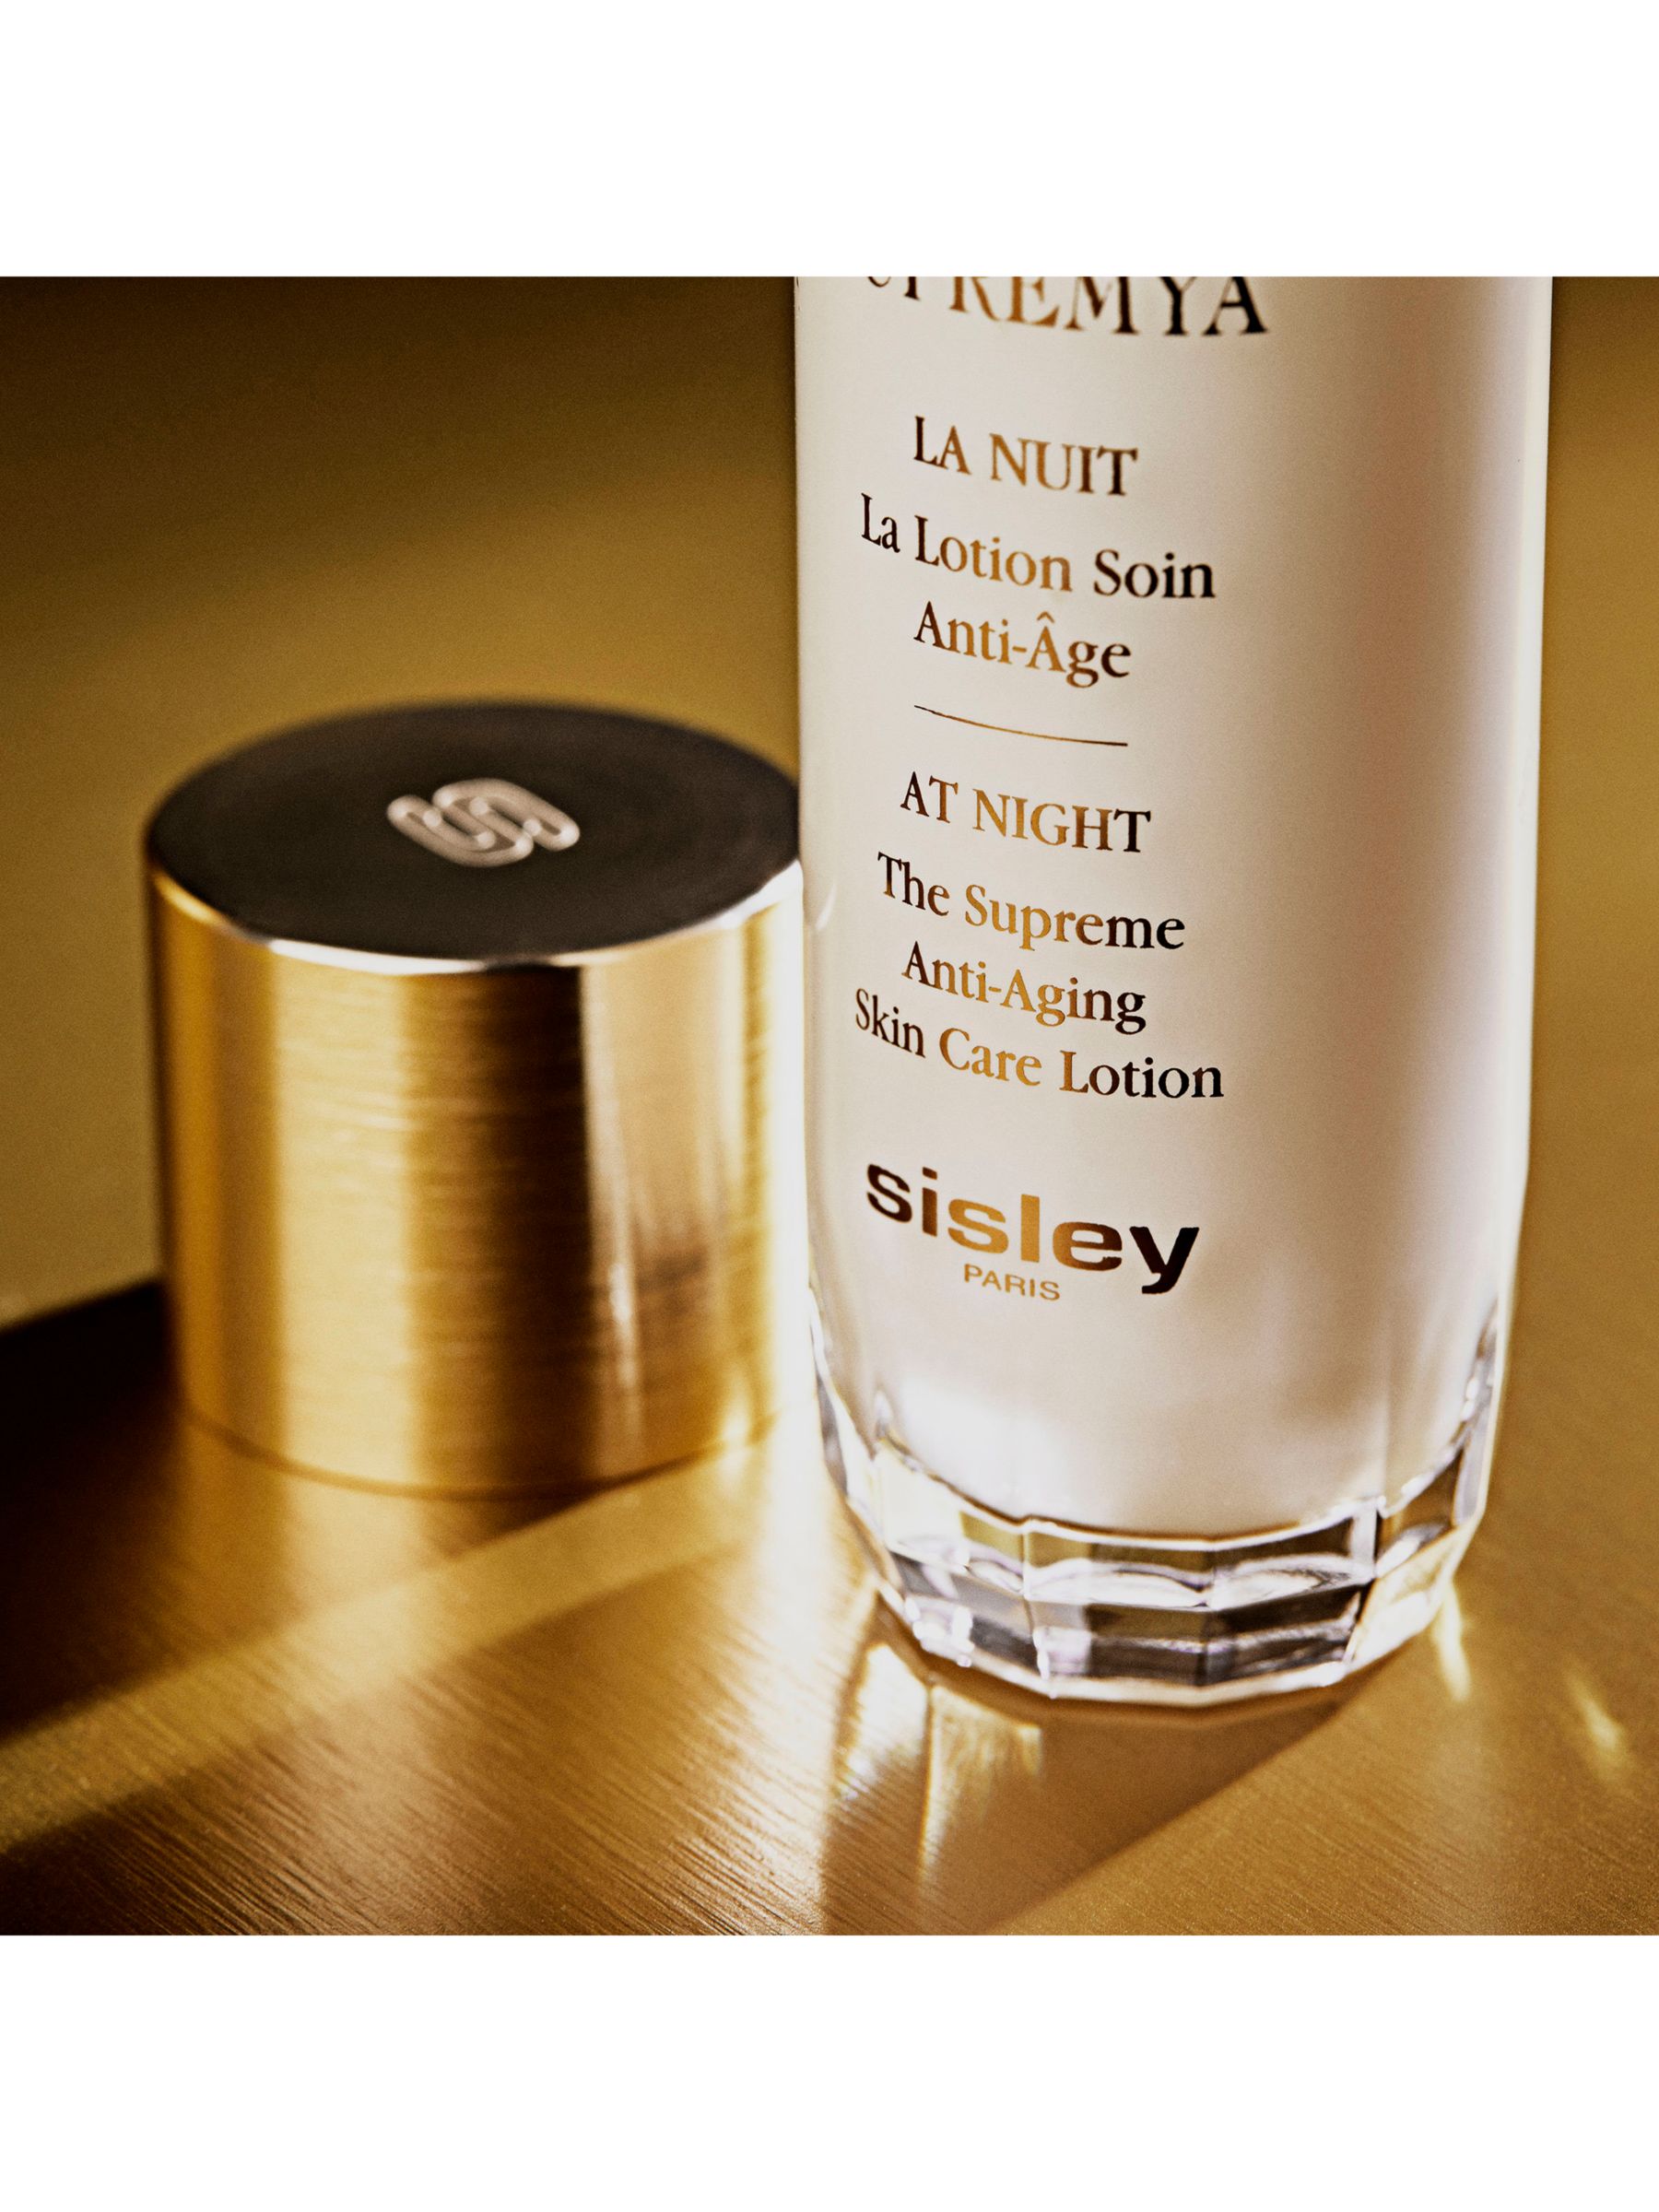 Sisley-Paris Supremÿa At Night The Supreme Anti-Ageing Skin Care Lotion, 140ml 5